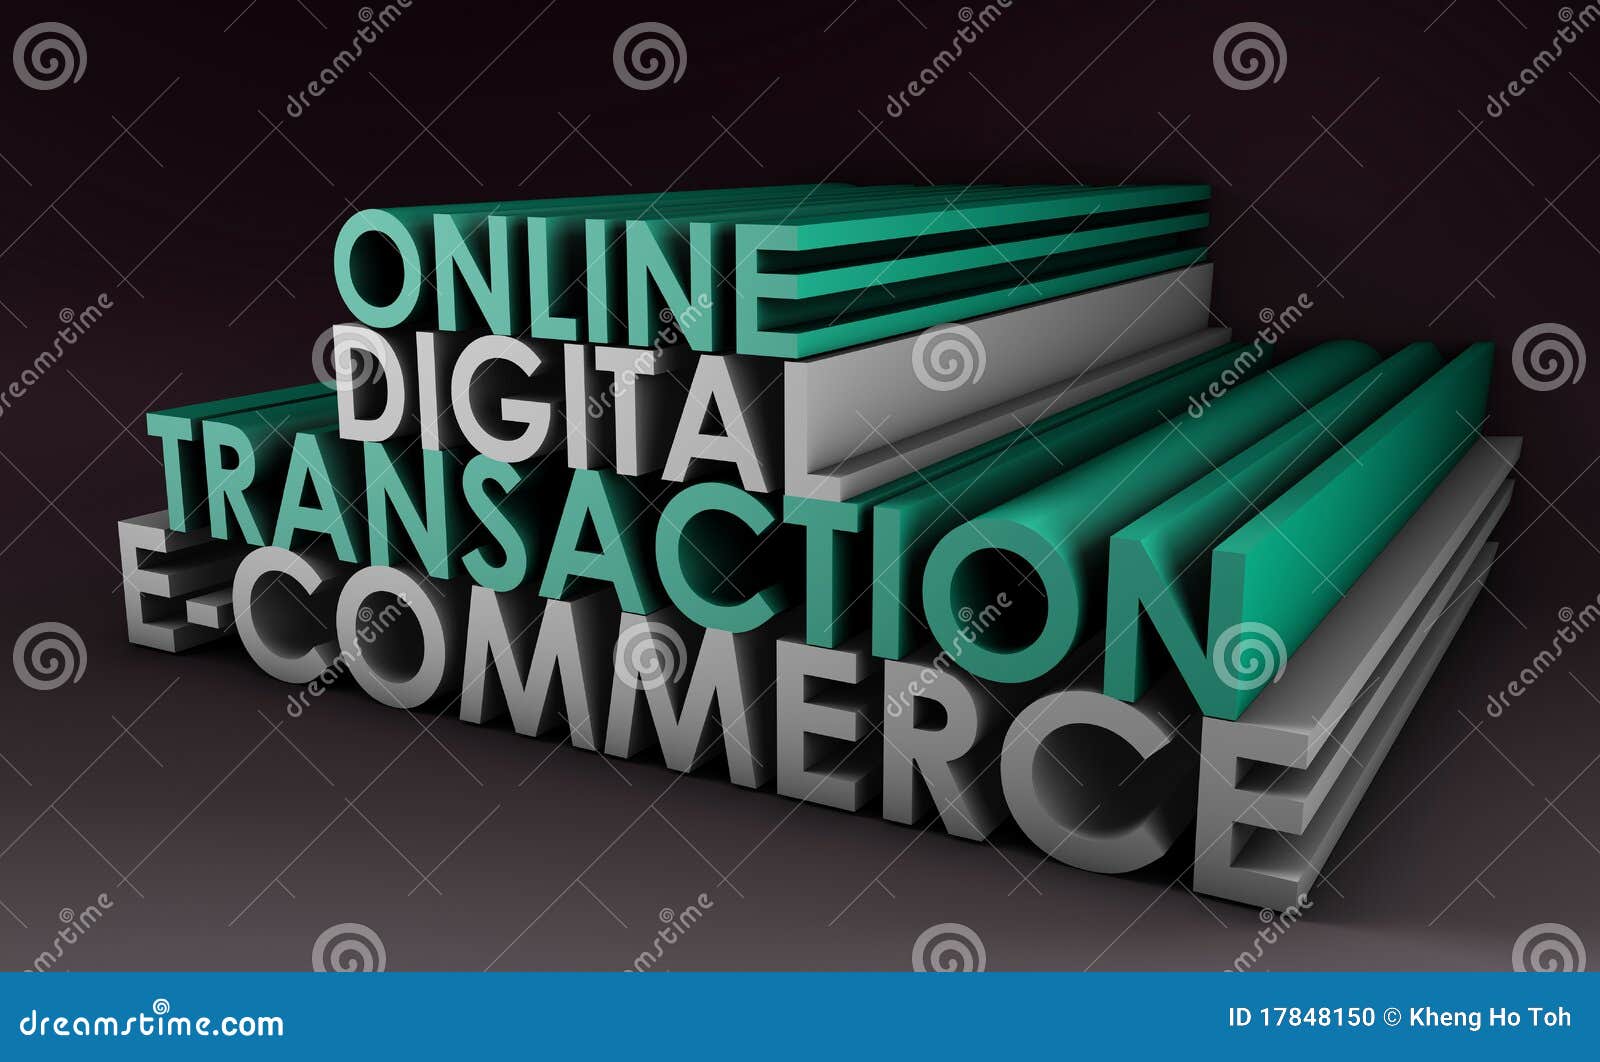 online digital transaction